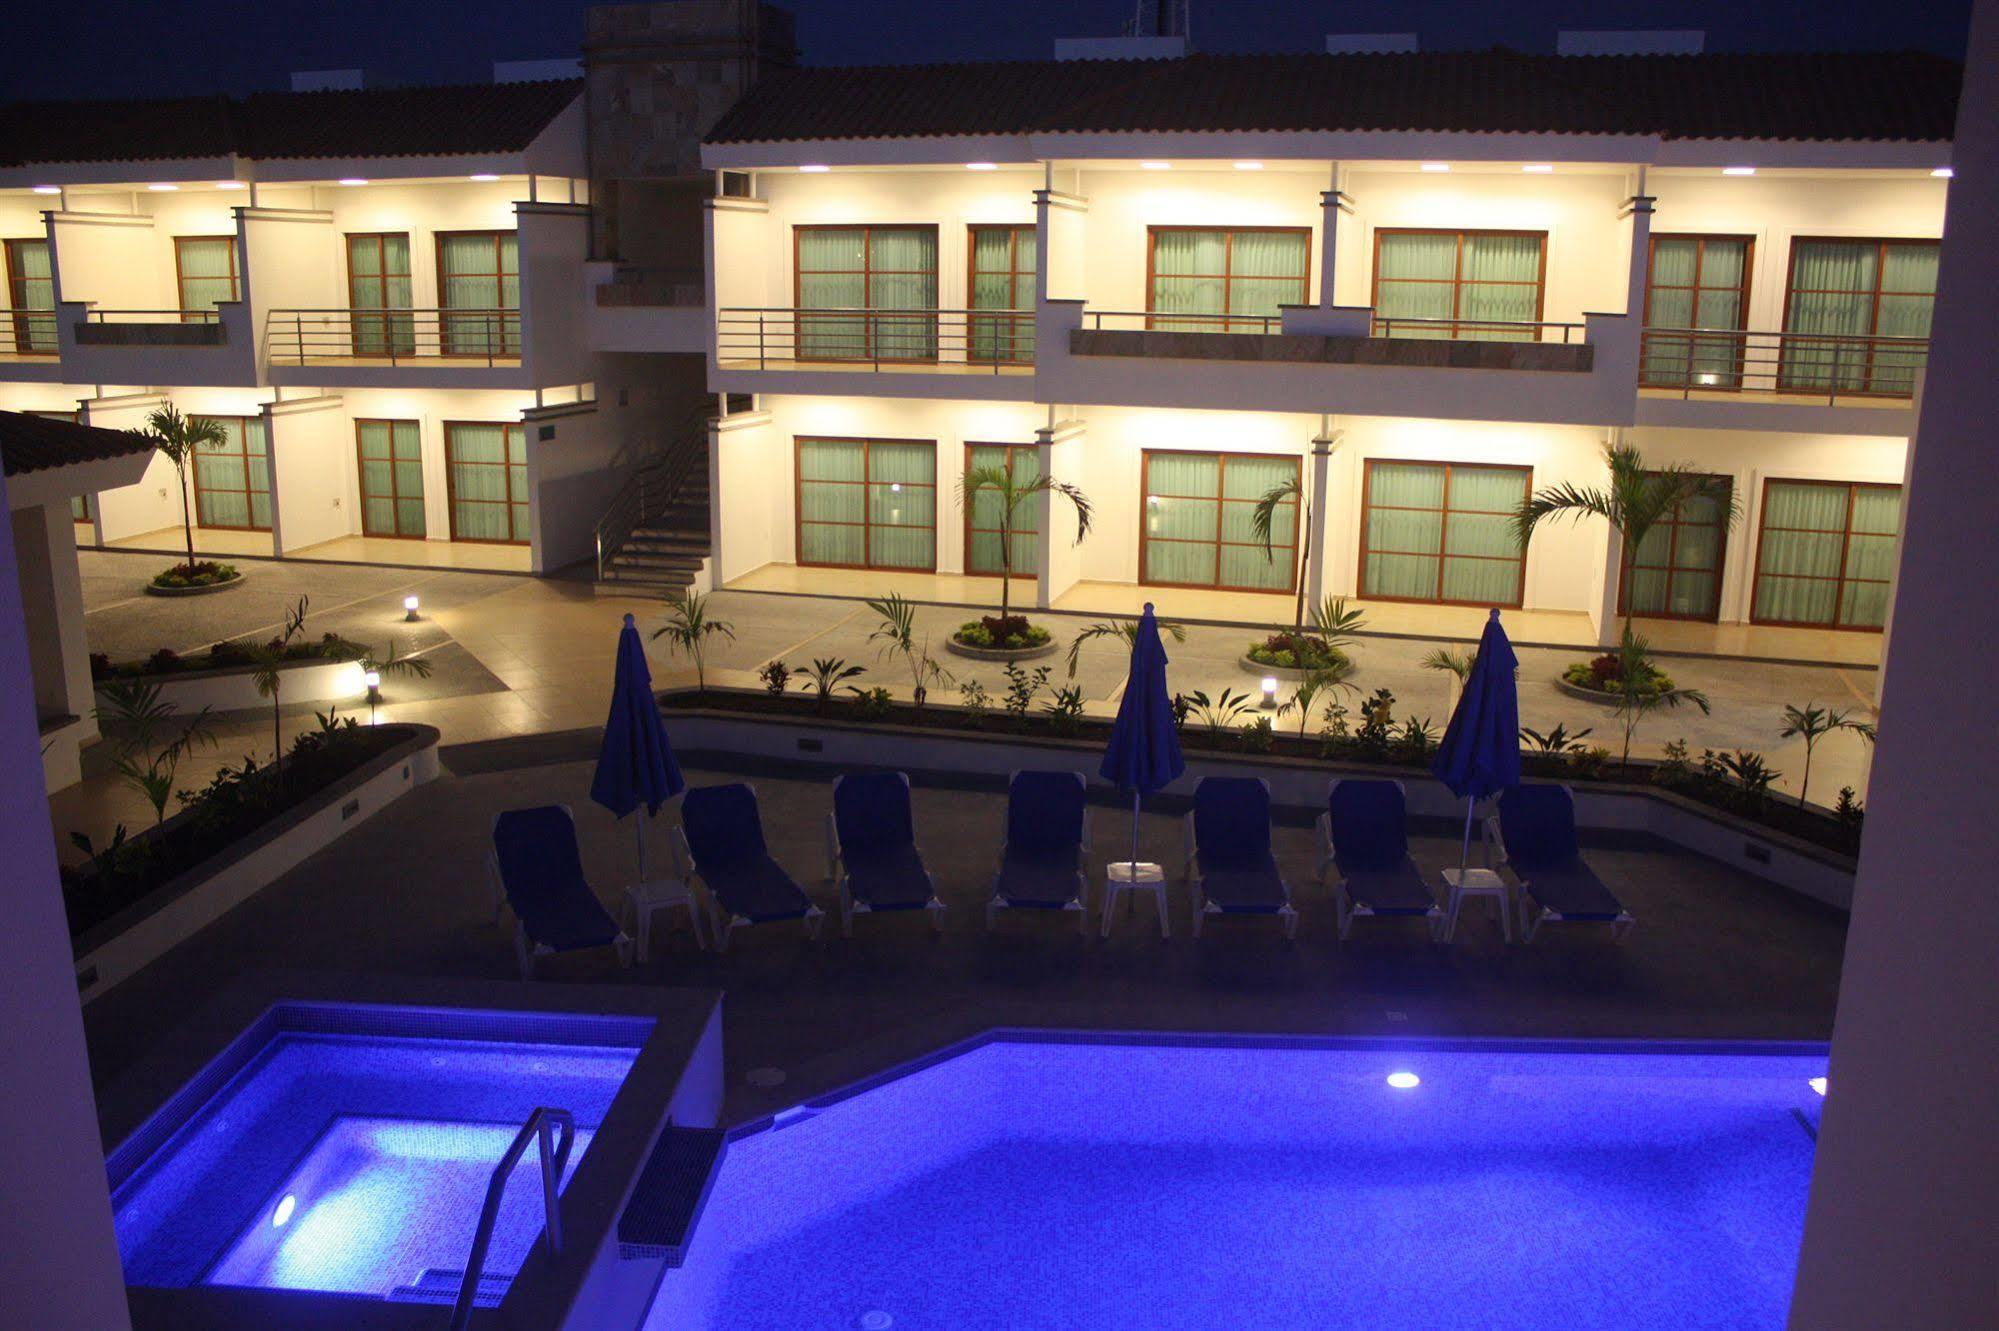 Marena Suites & Apartments Mazatlán Exterior foto